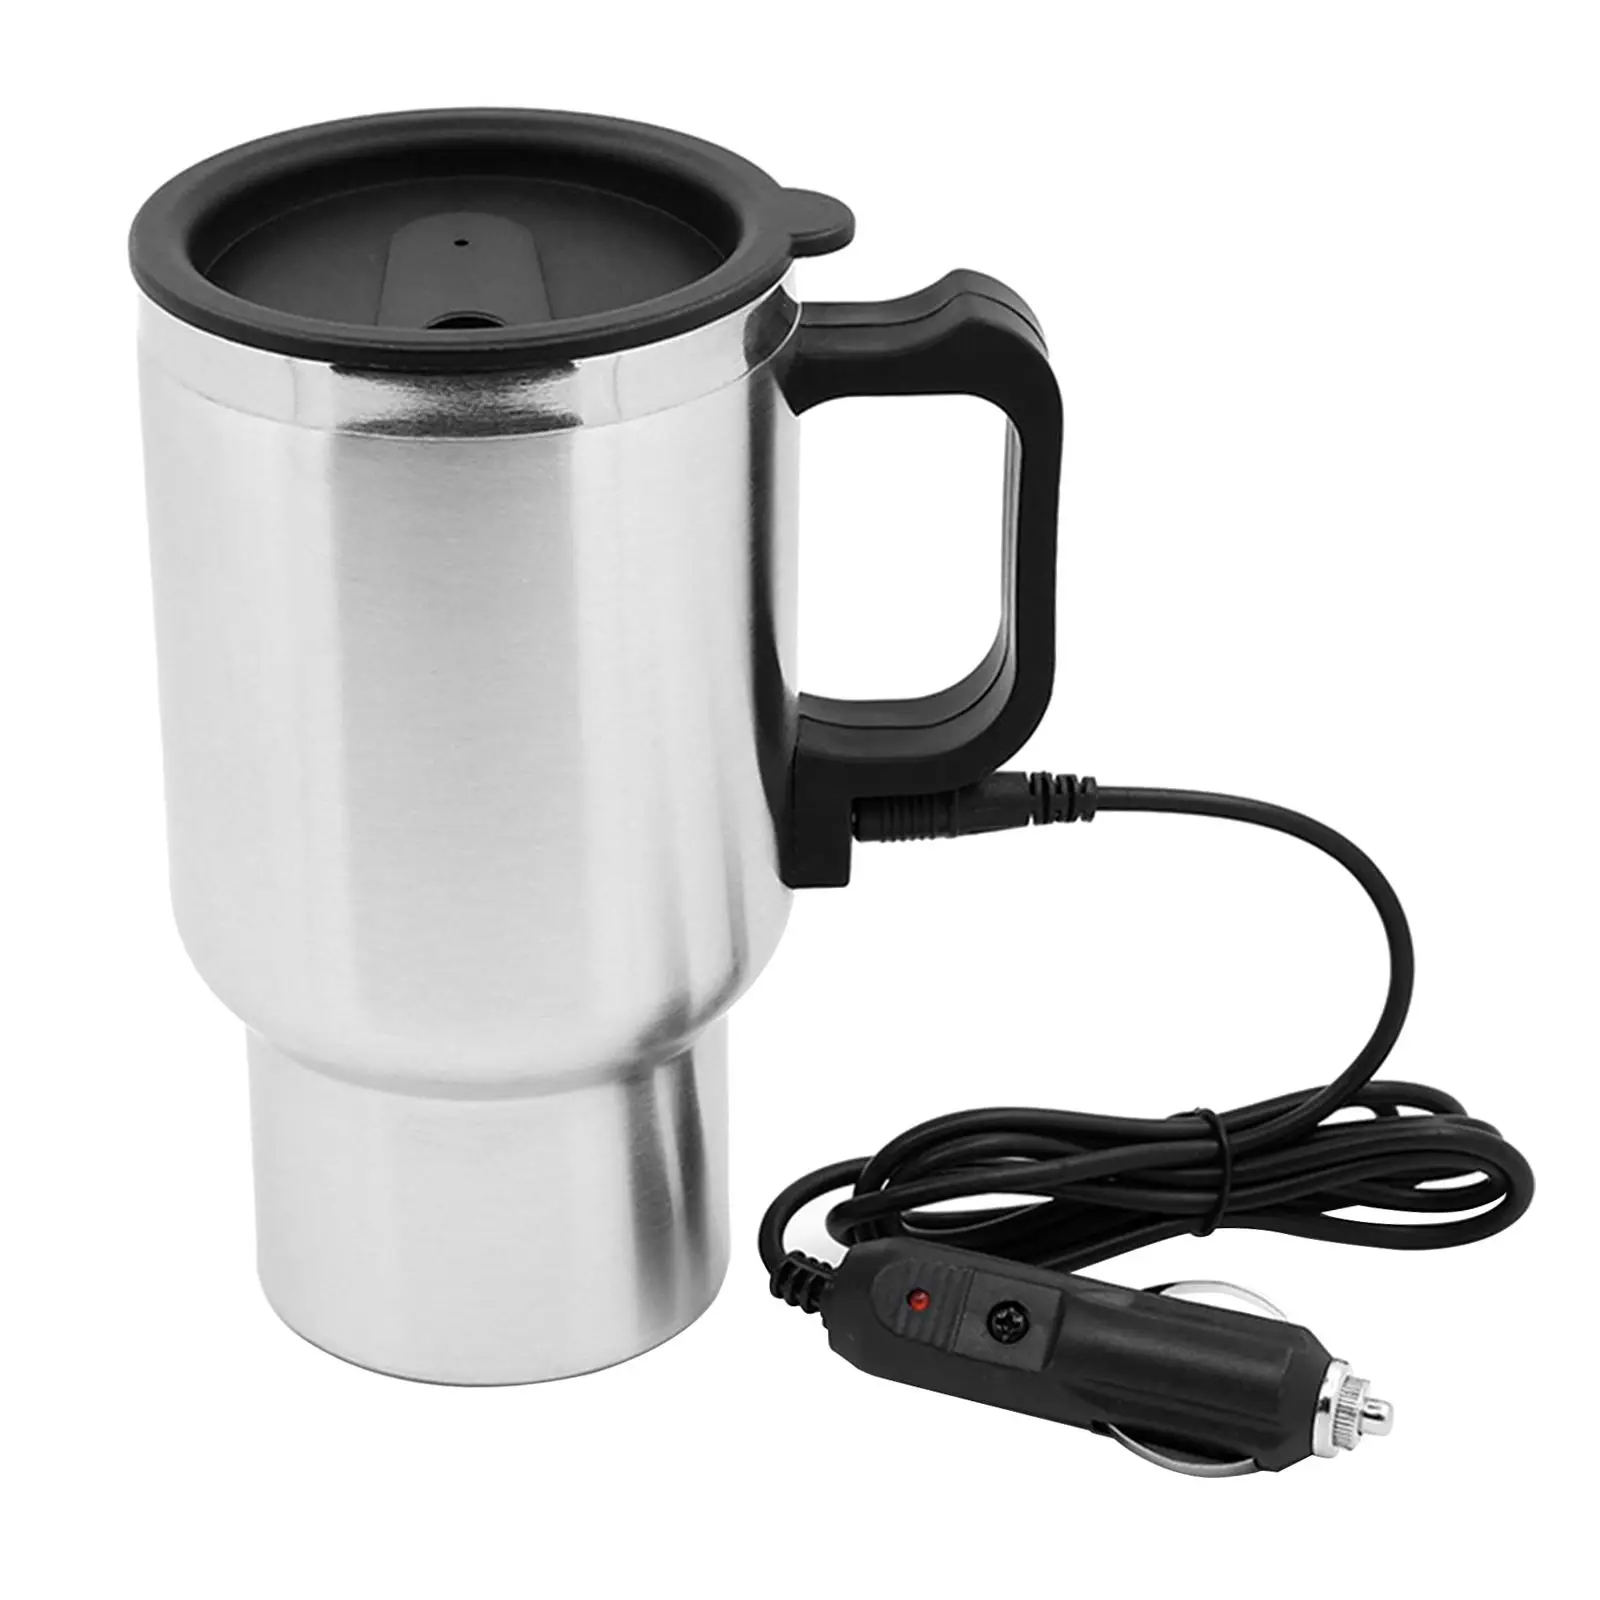 12V Car Heating Cup 500ml Car Kettle Heater for Tea Coffee